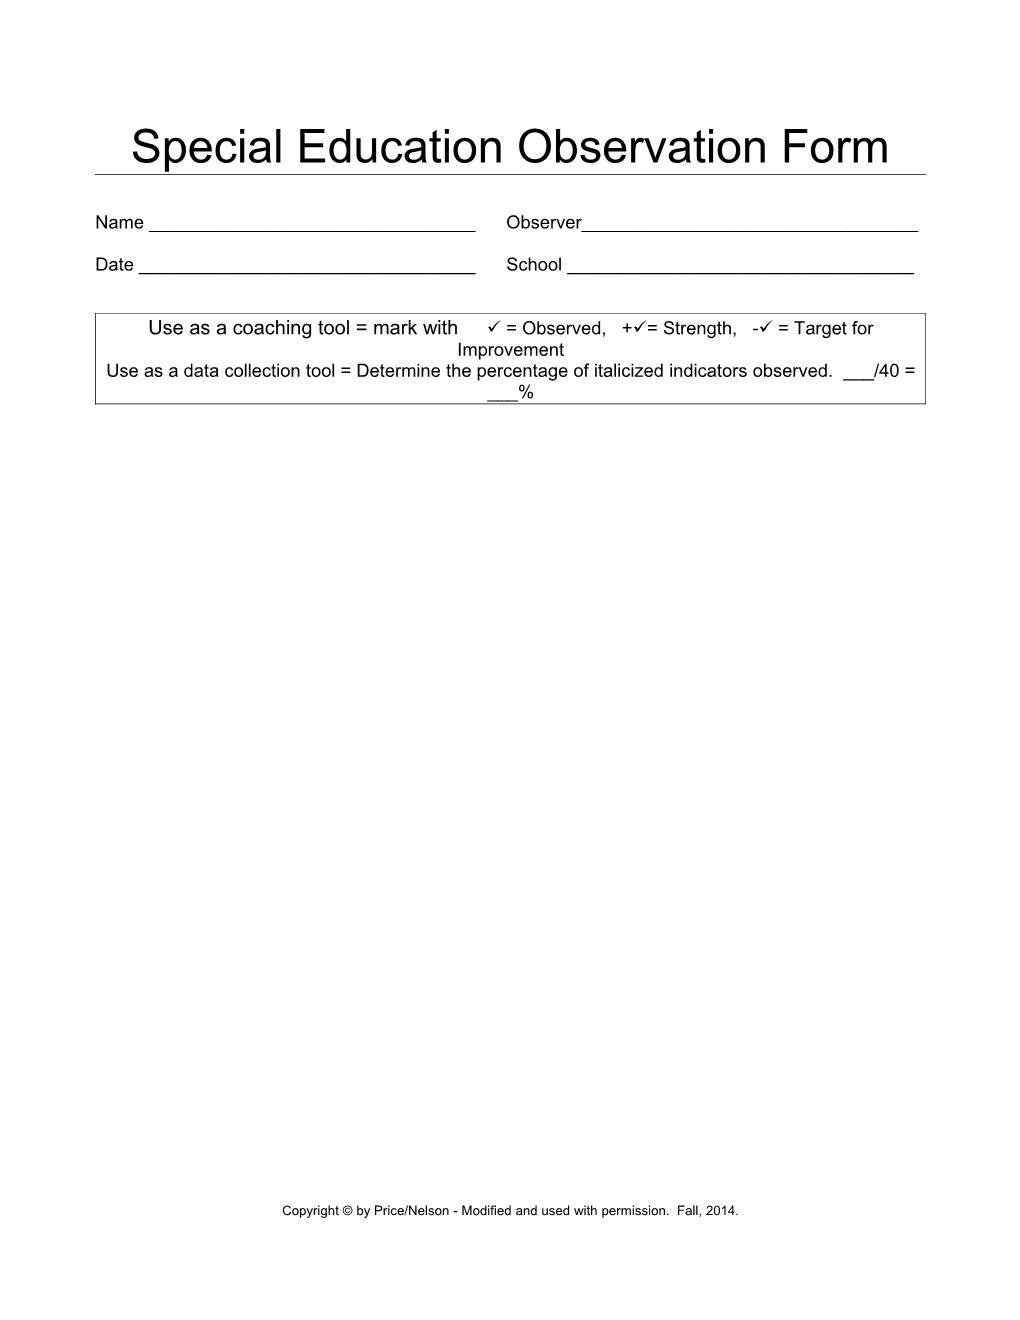 Special Education Observation Form